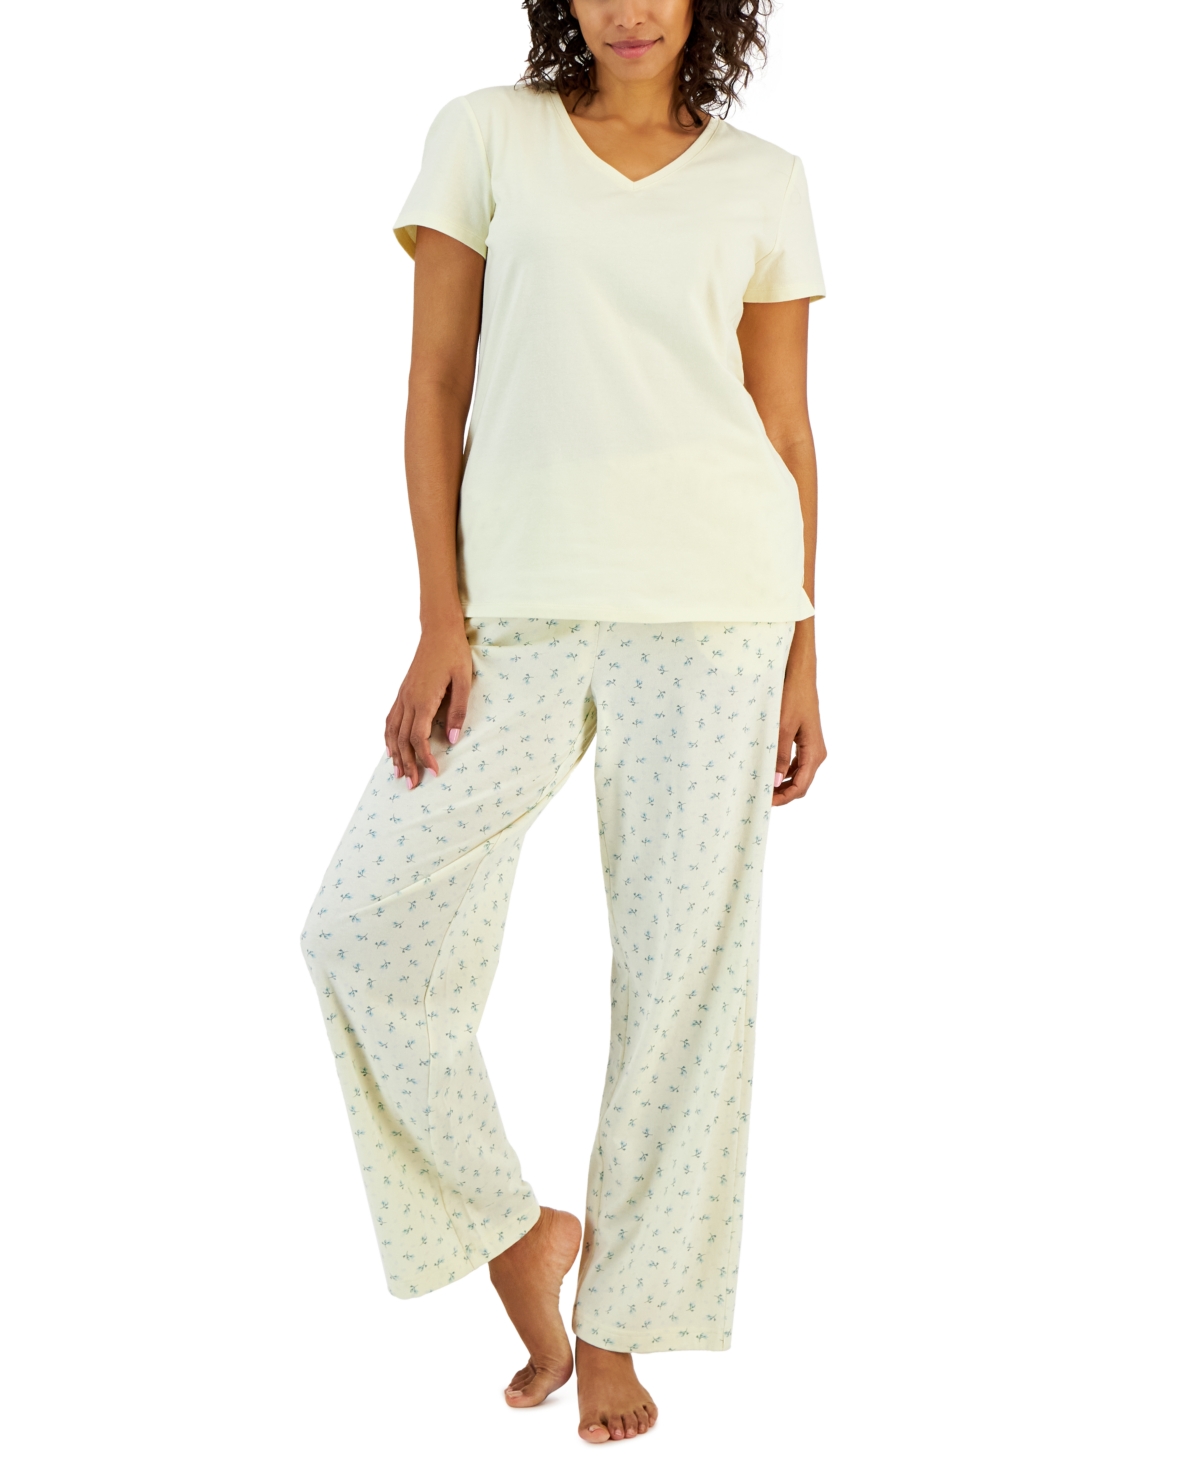 Charter Club Women's Printed Fleece Pajama Pants, Created for Macy's -  Macy's